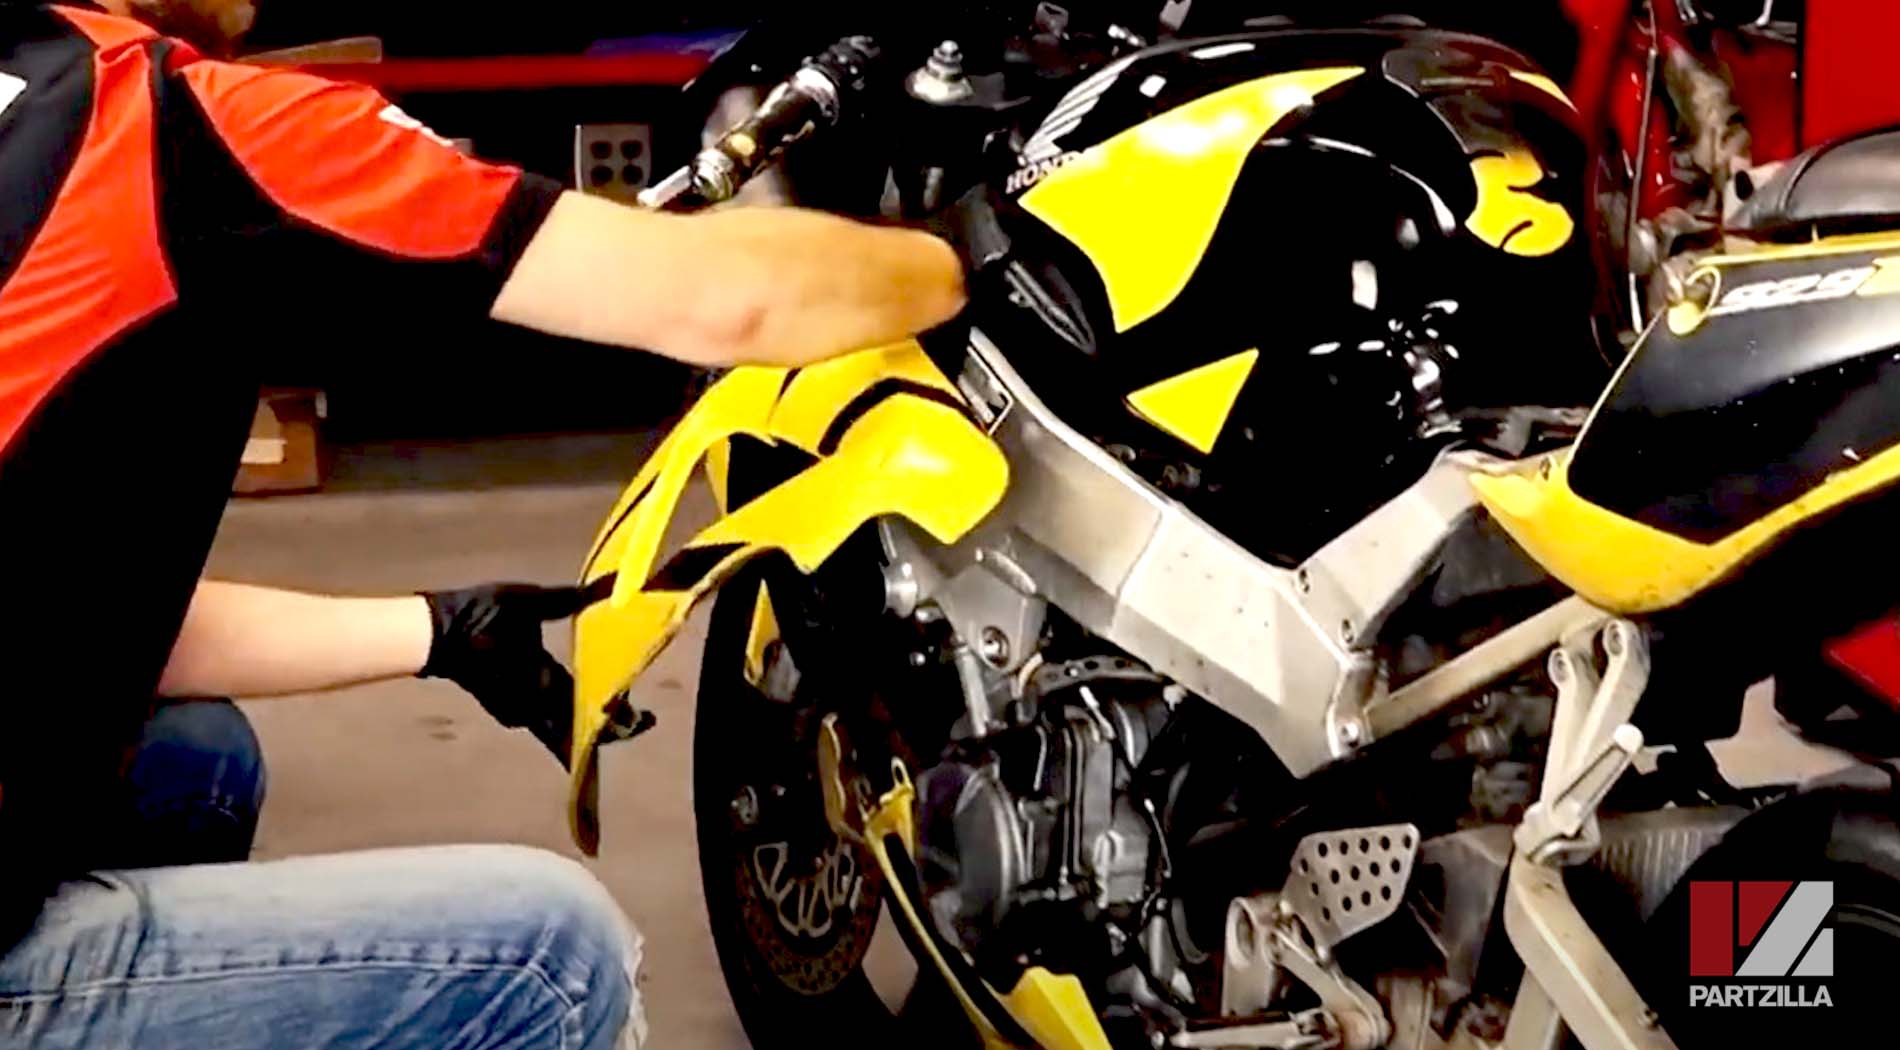 Honda CBR motorcycle stator replacement